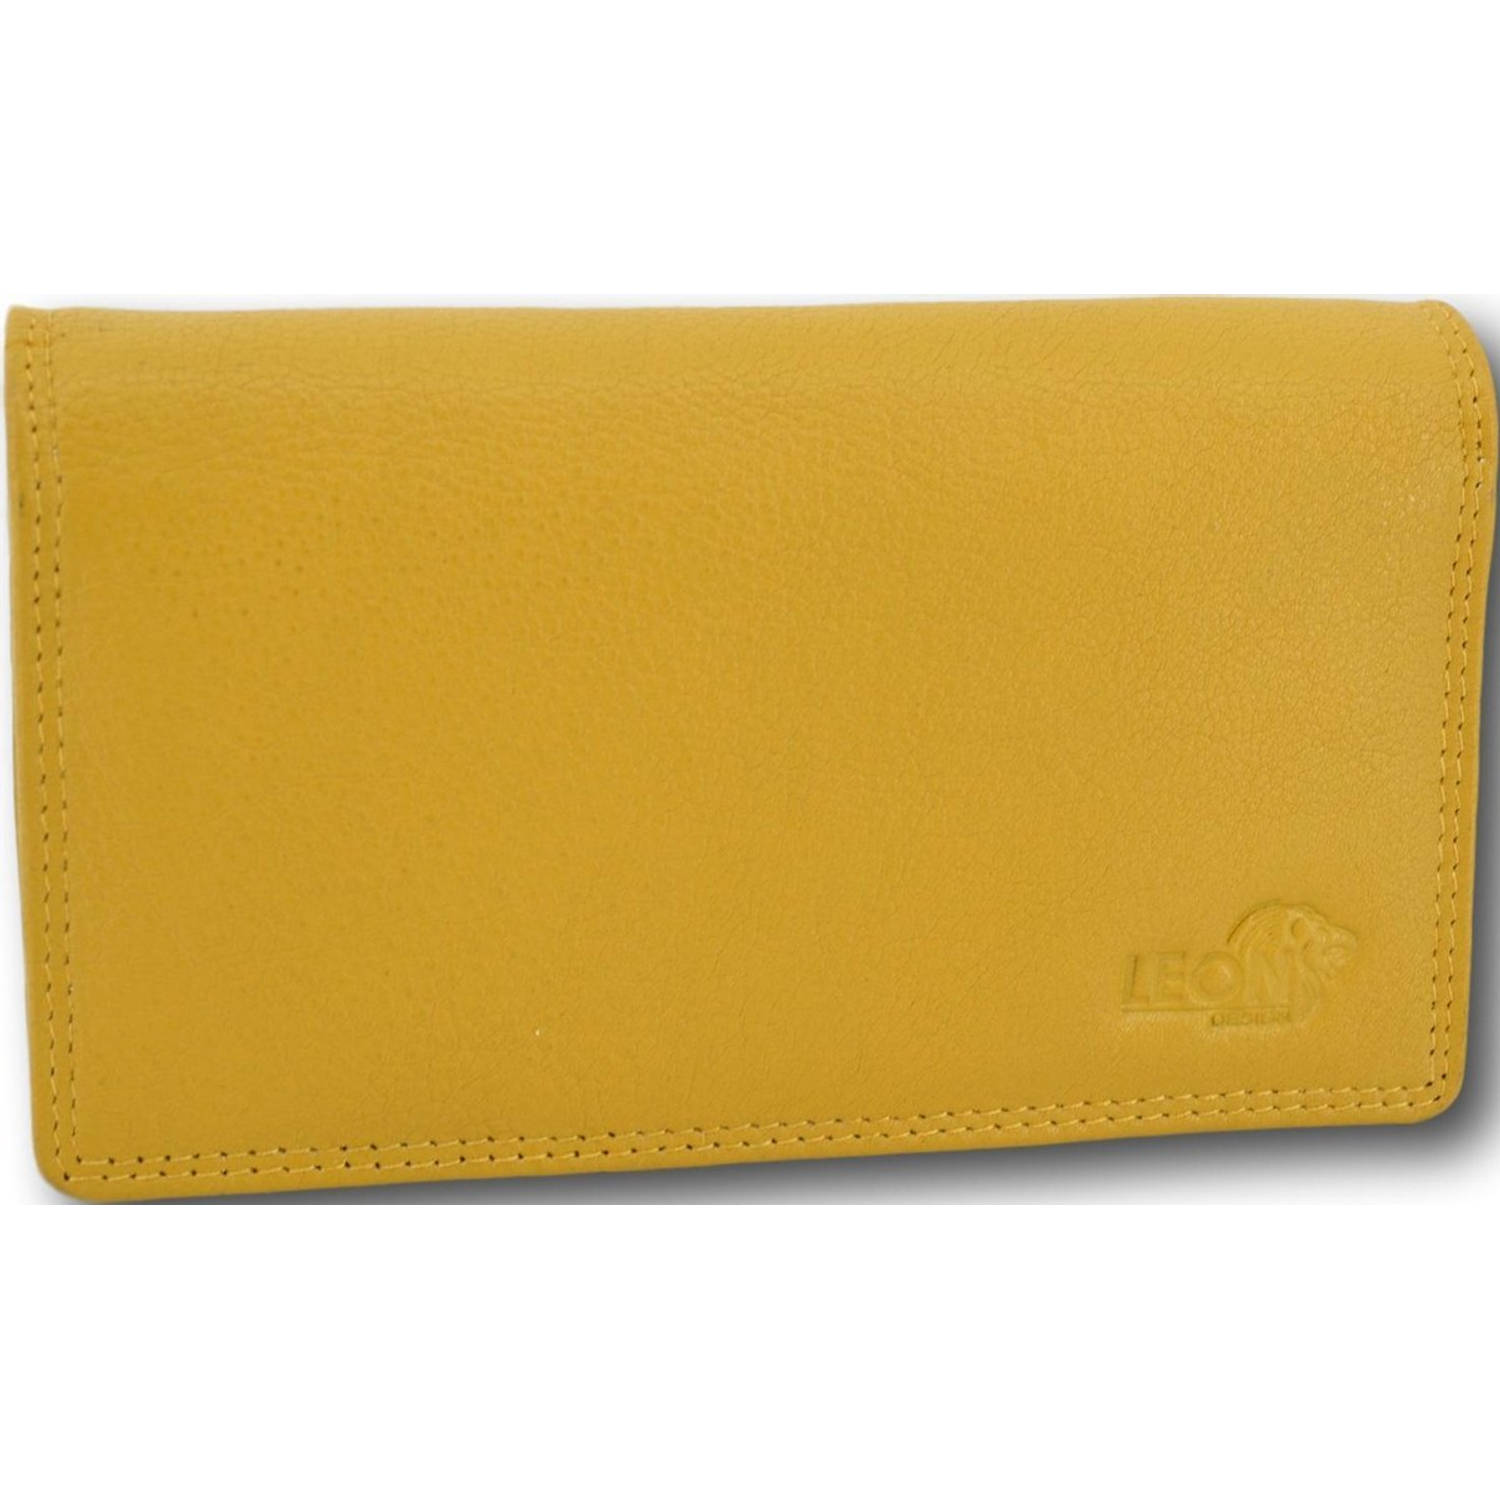 LeonDesign 16-W784 dames portemonnee mosterd geel leer